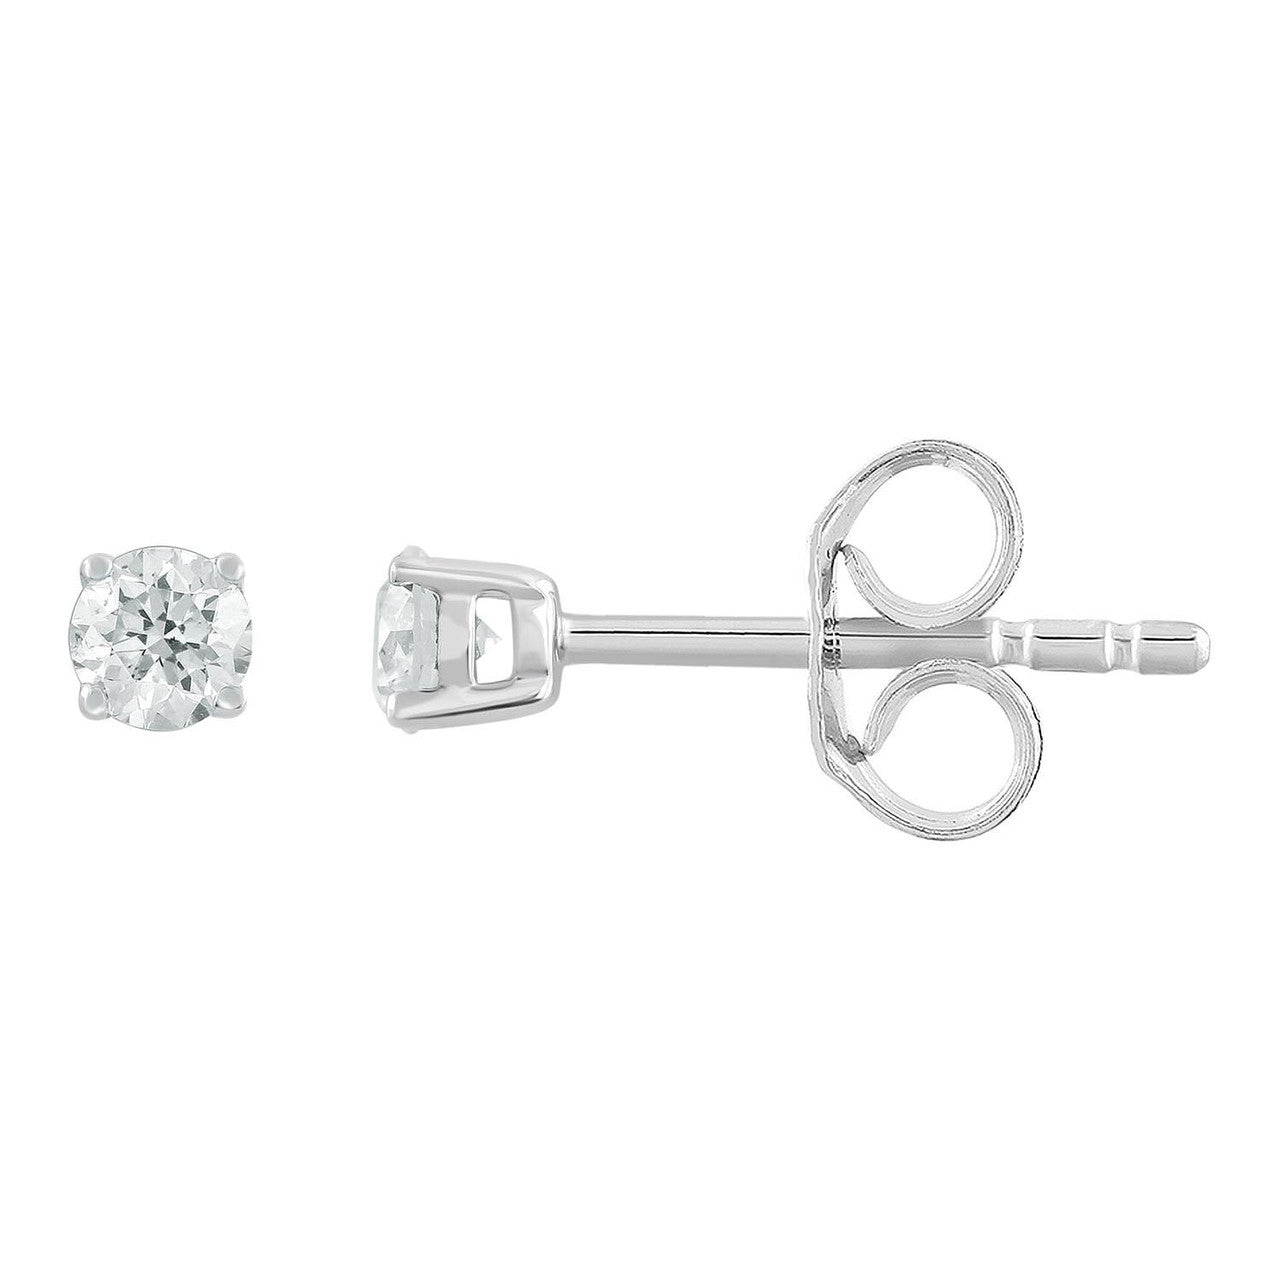 Ice Jewellery Stud Earrings with 0.15ct Diamonds in 9K White Gold - IGE-13911A-015-W | Ice Jewellery Australia